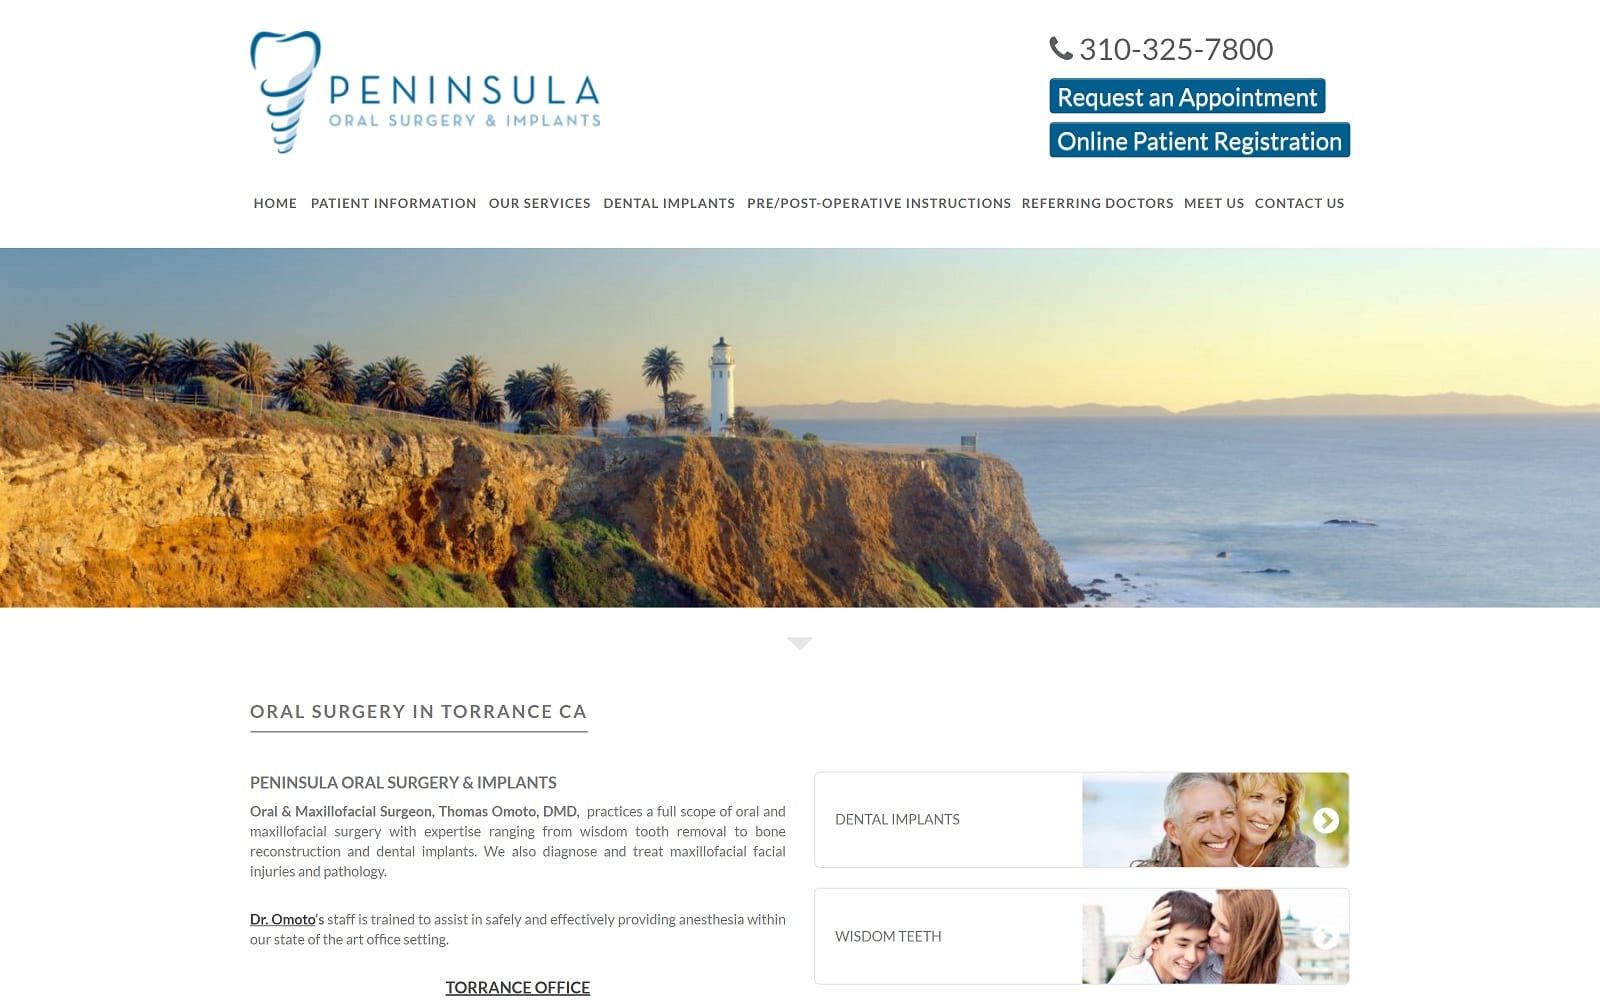 The screenshot of peninsula oral surgery & implants peninsulaos. Com dr. Thomas omotowebsite